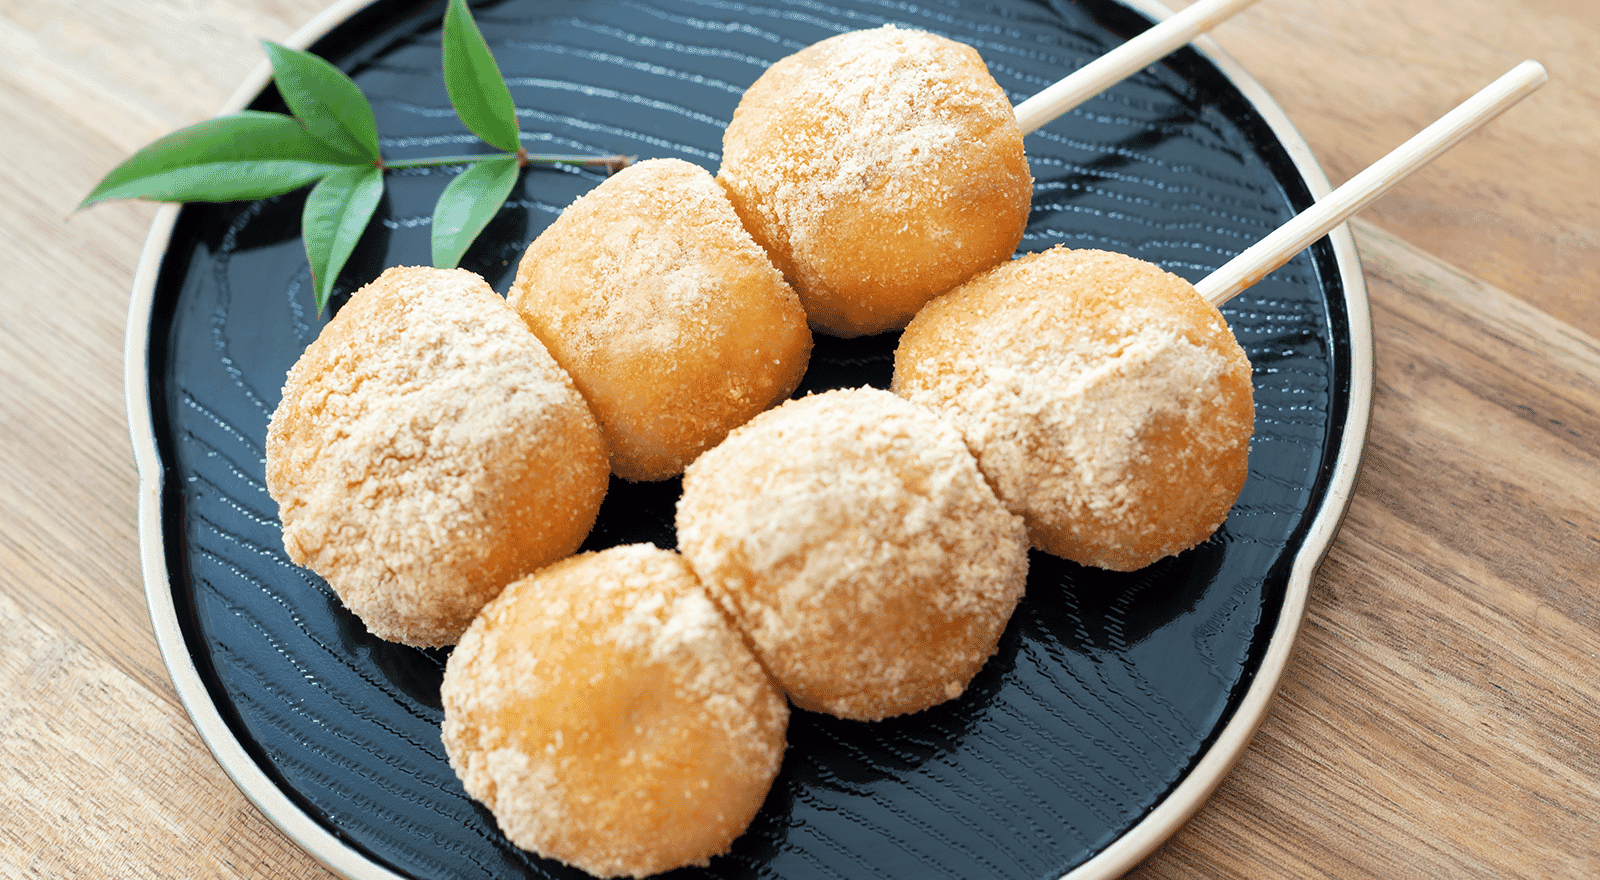 Japanese dessert kibi dango